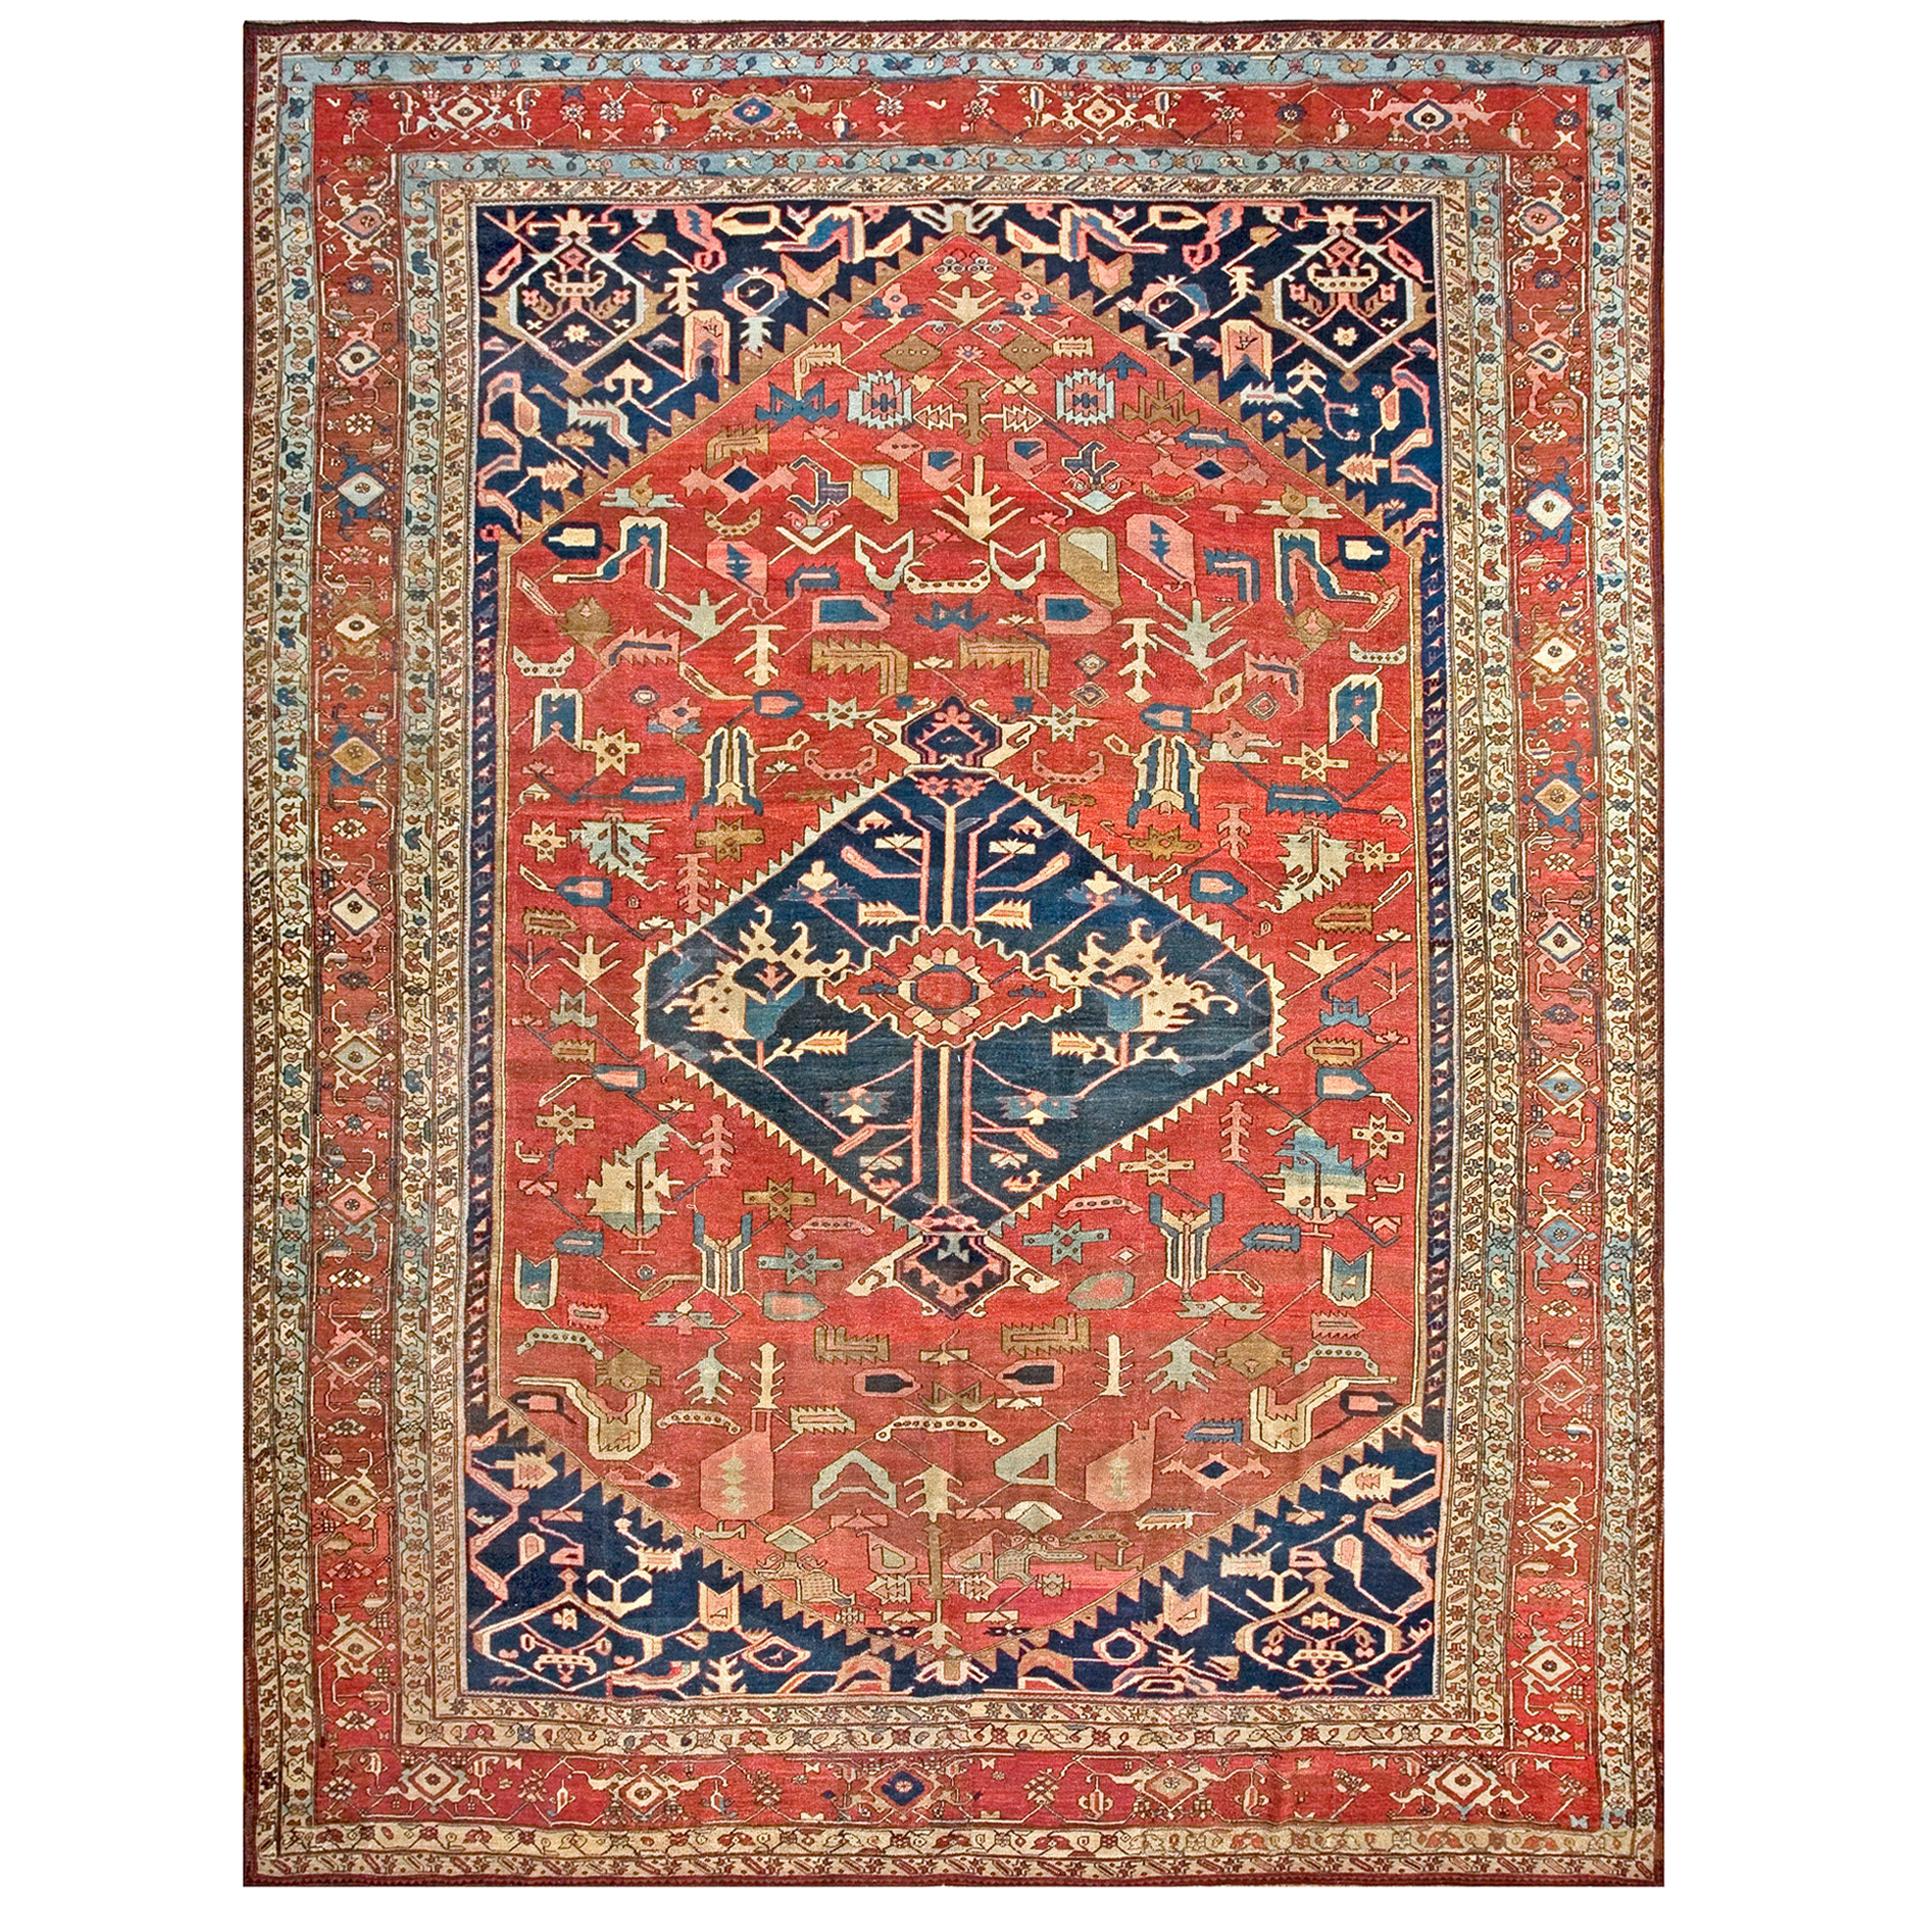 Late 19th Century N.W. Persian Serapi Carpet ( 11'5" x 14'5" - 350 x 440 ) For Sale